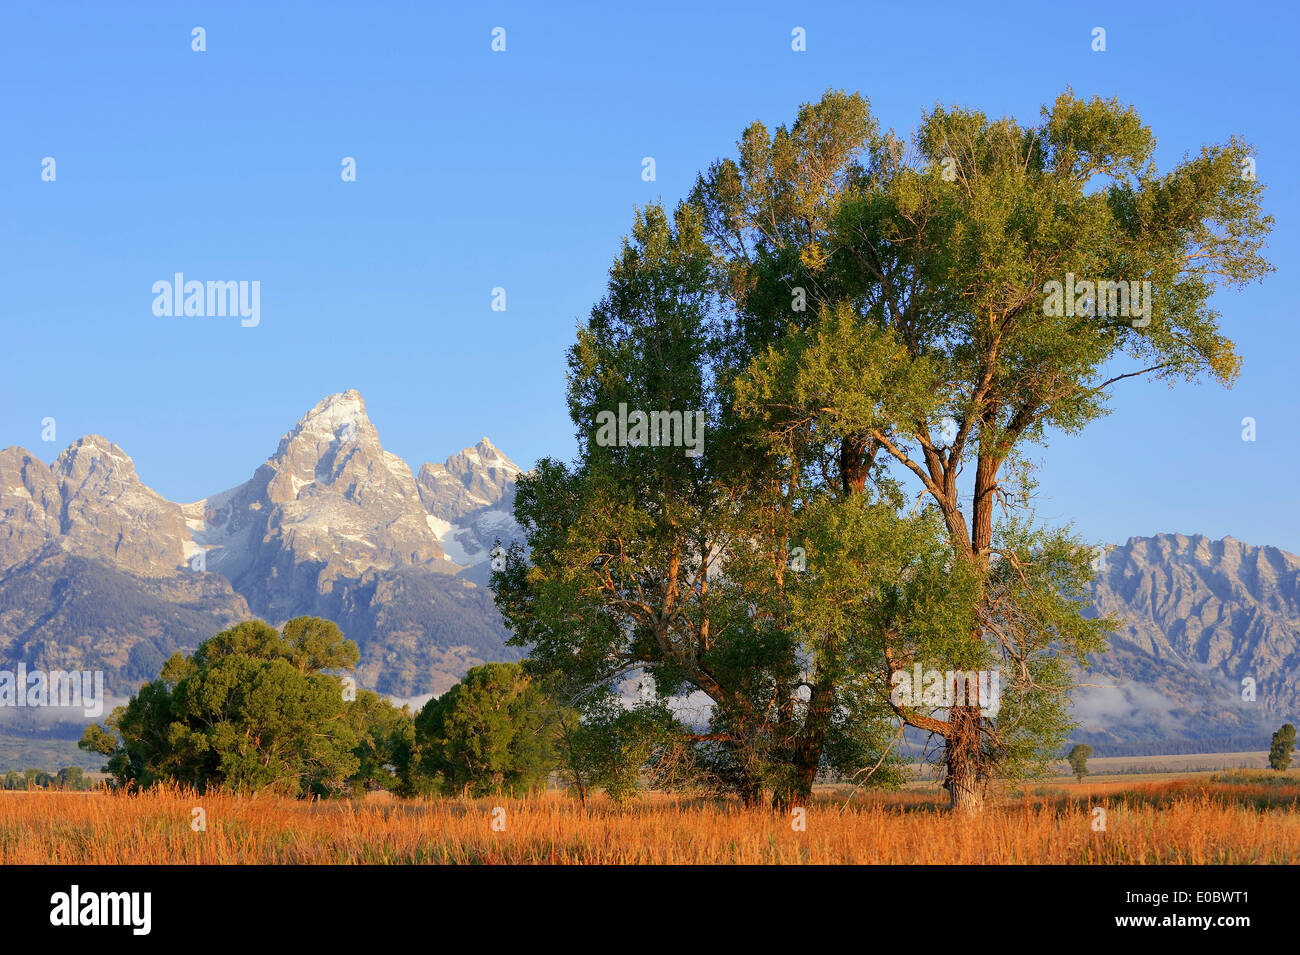 Álamos (Populus estrés spec.) en la parte frontal de la Cordillera Teton, parque nacional Grand Teton, Wyoming, EE.UU. Foto de stock